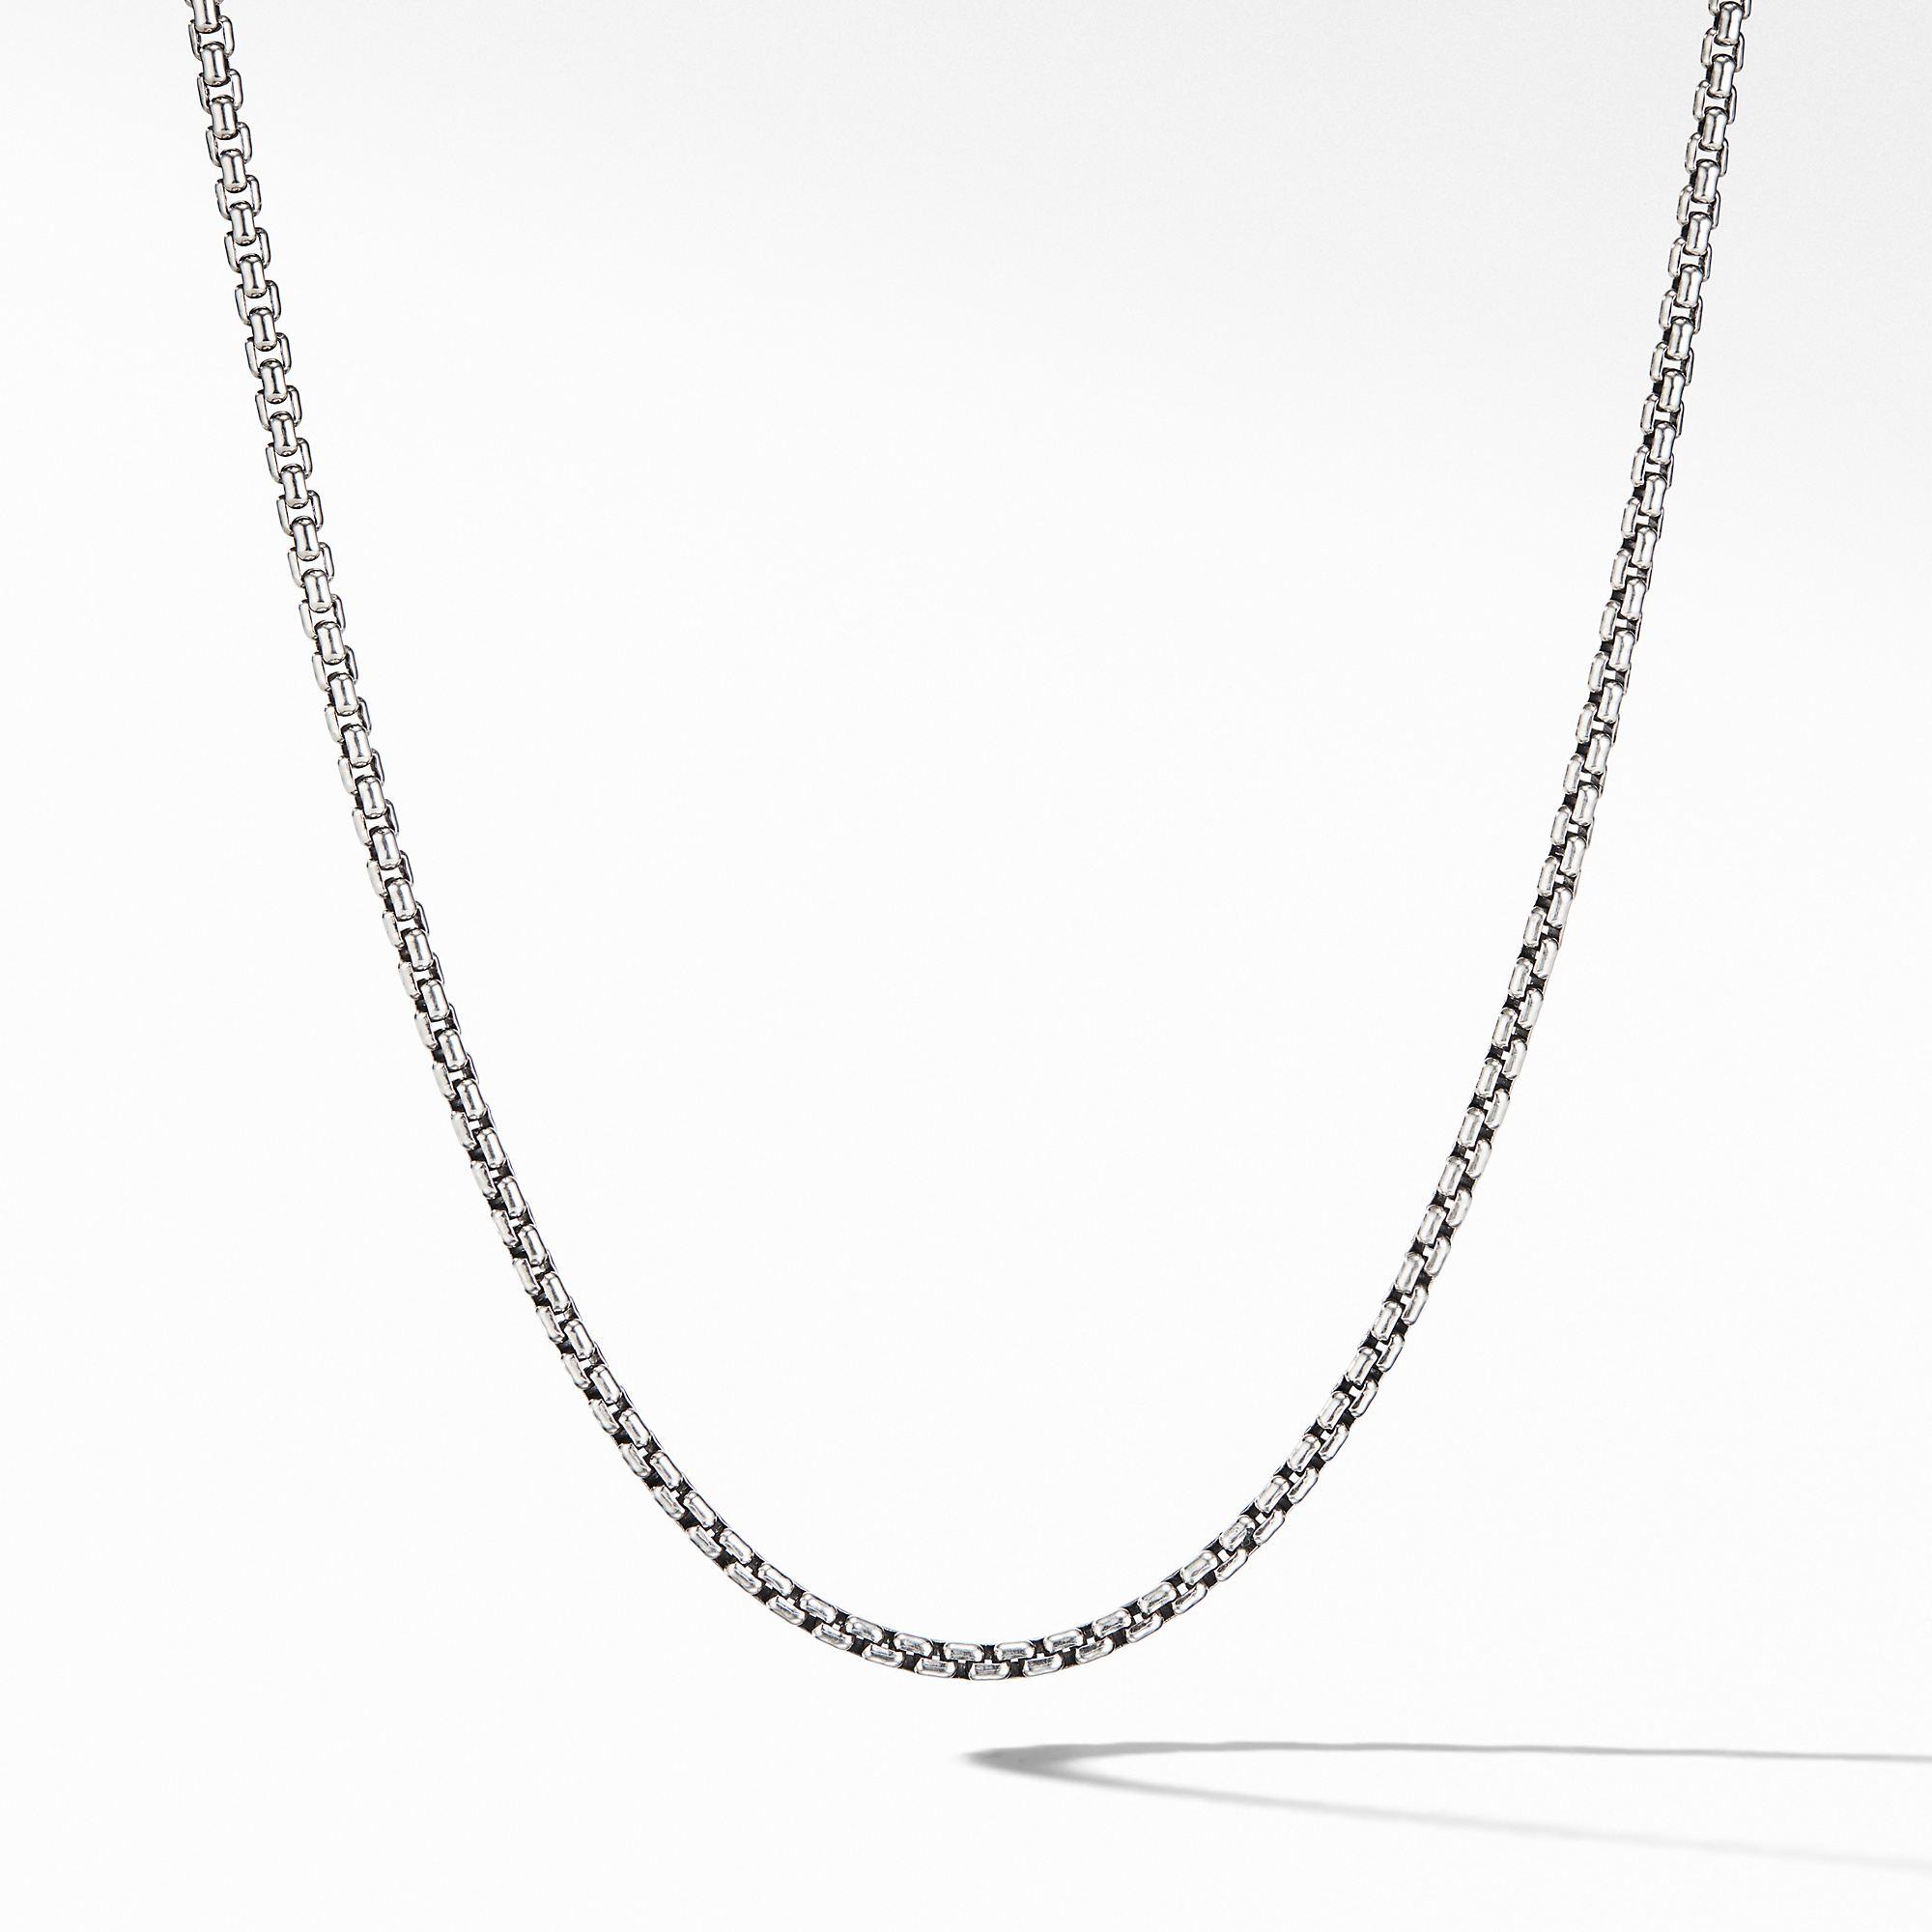 David Yurman Men's small Box Chain Necklace in Sterling Silver, 26 inches